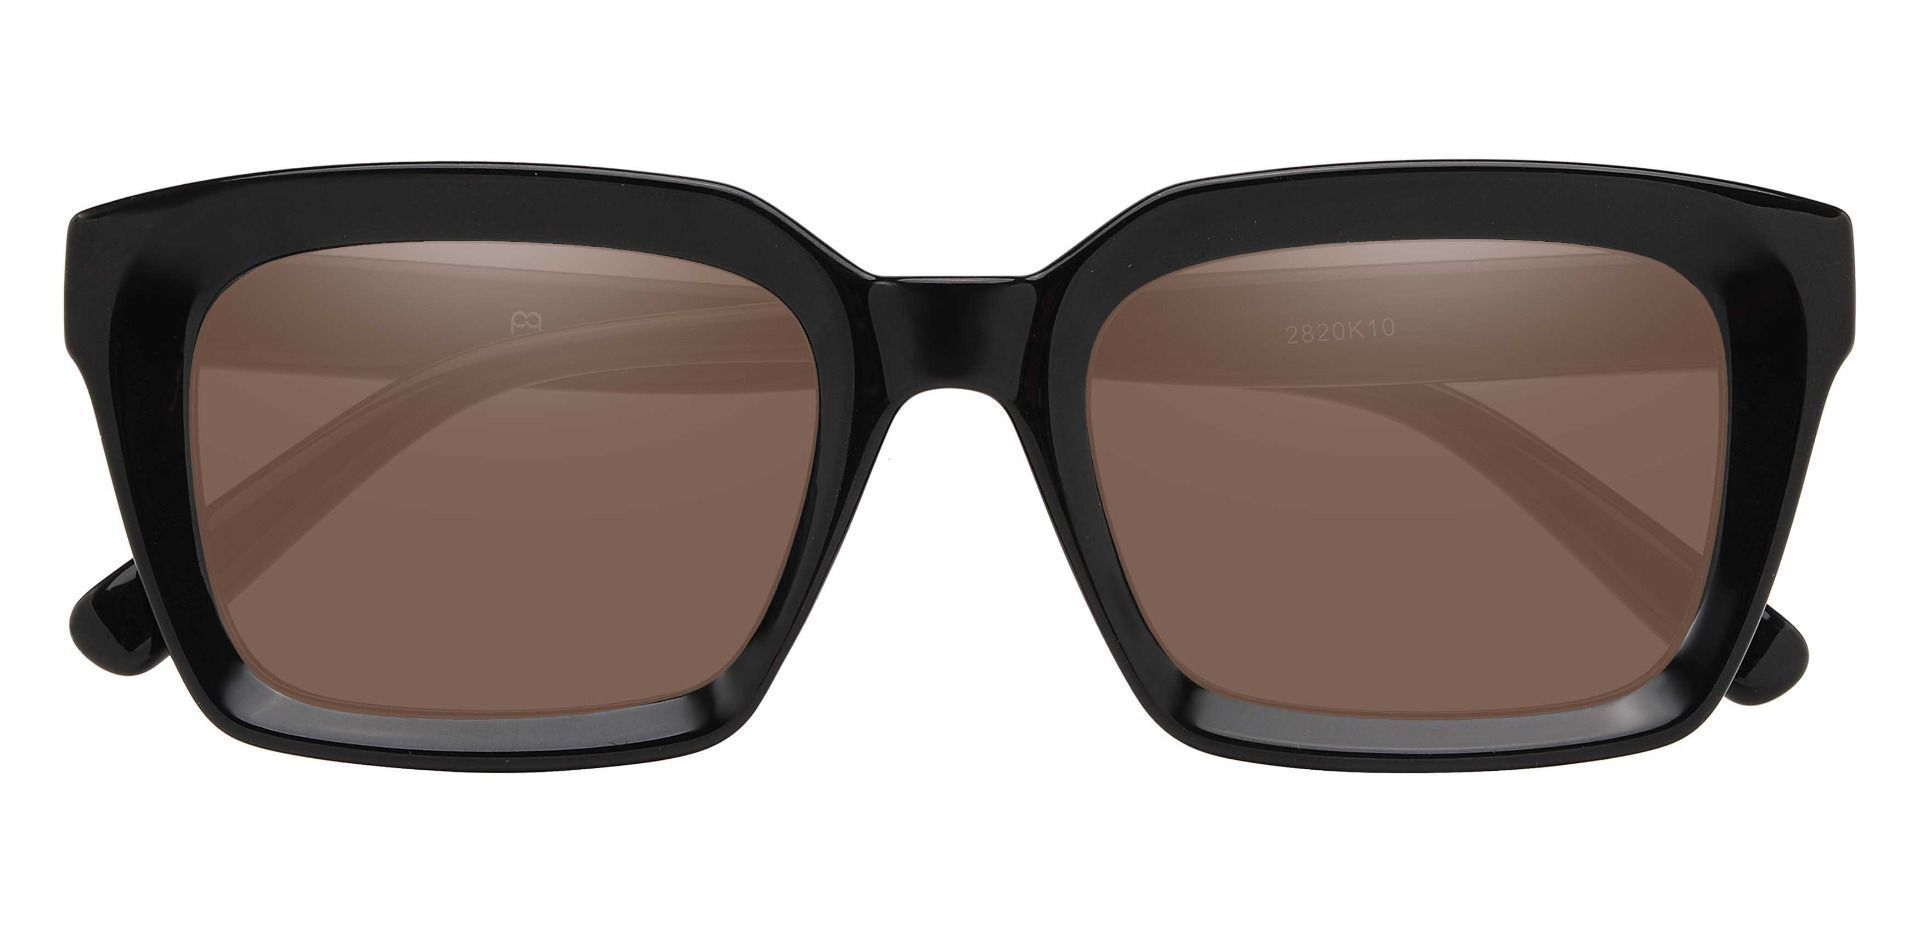 Unity Rectangle Prescription Sunglasses - Black Frame With Brown Lenses